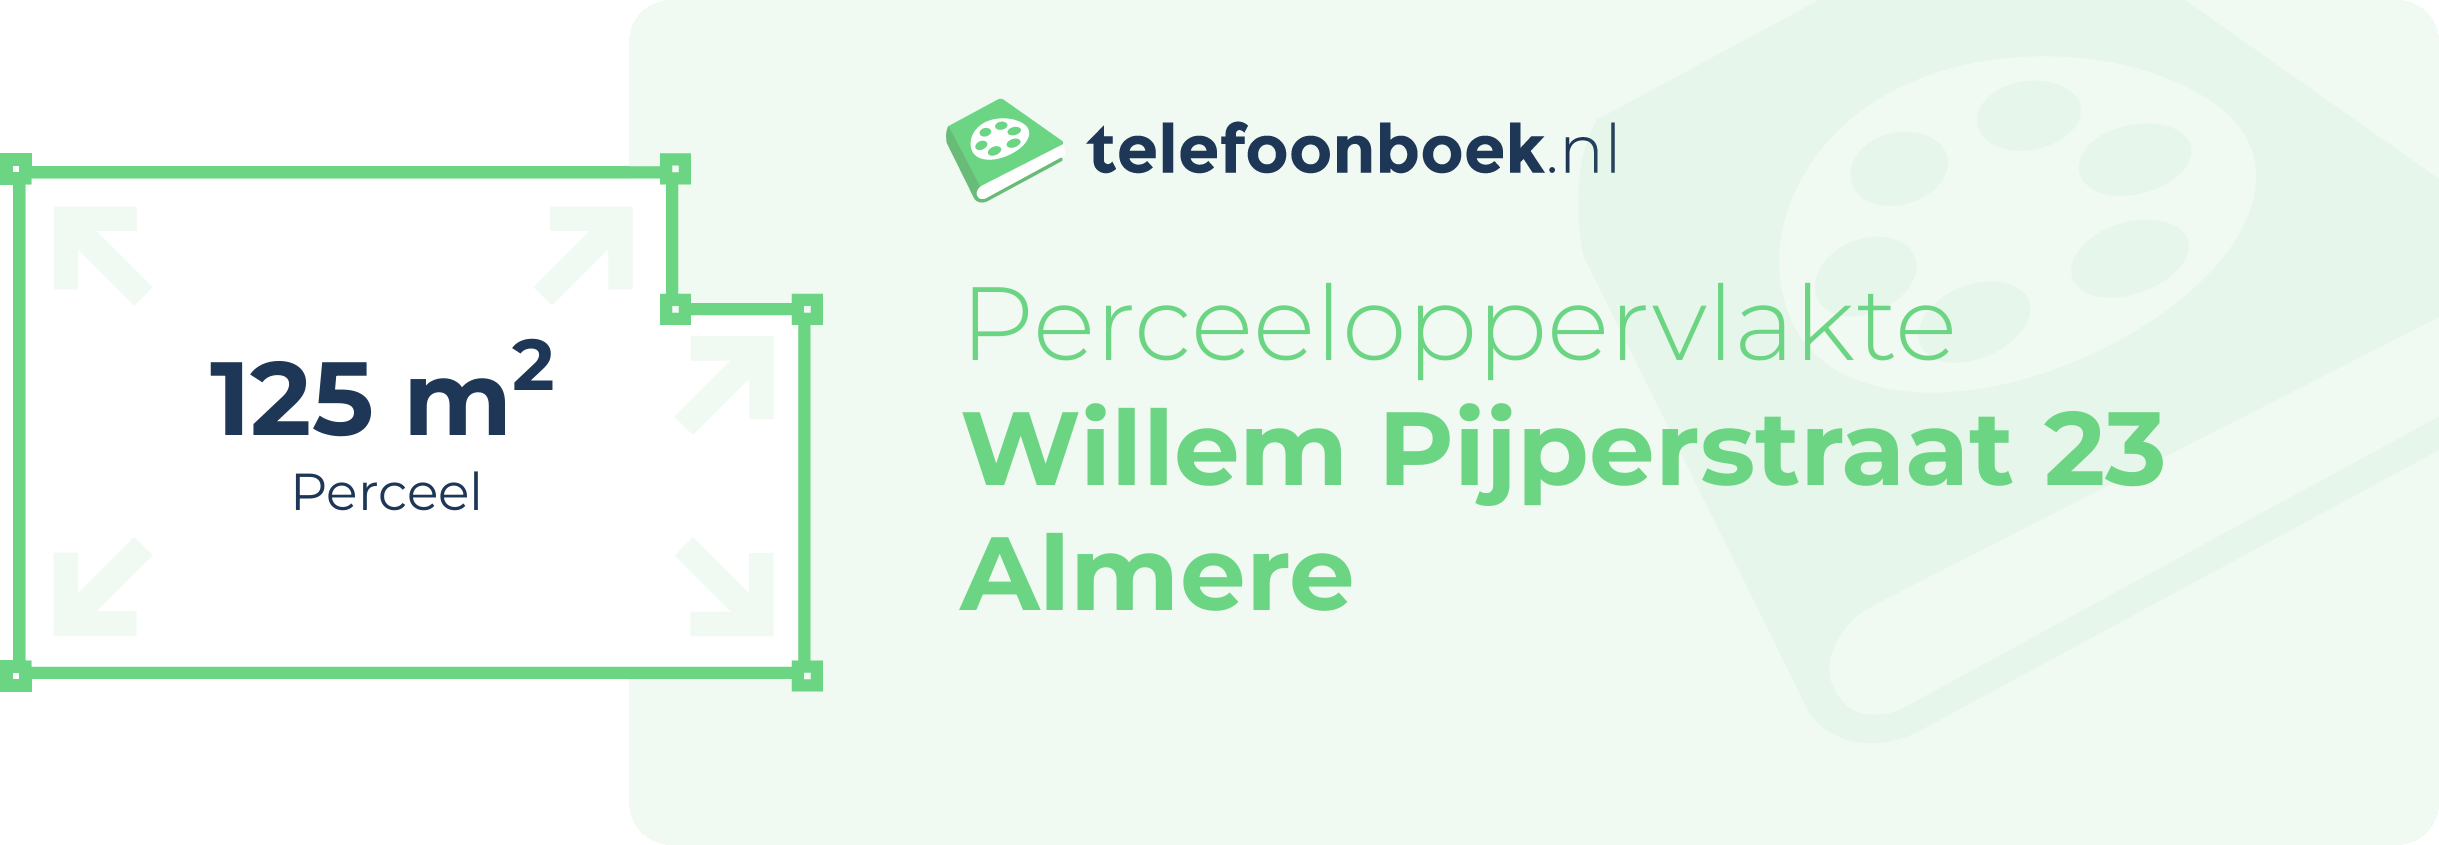 Perceeloppervlakte Willem Pijperstraat 23 Almere